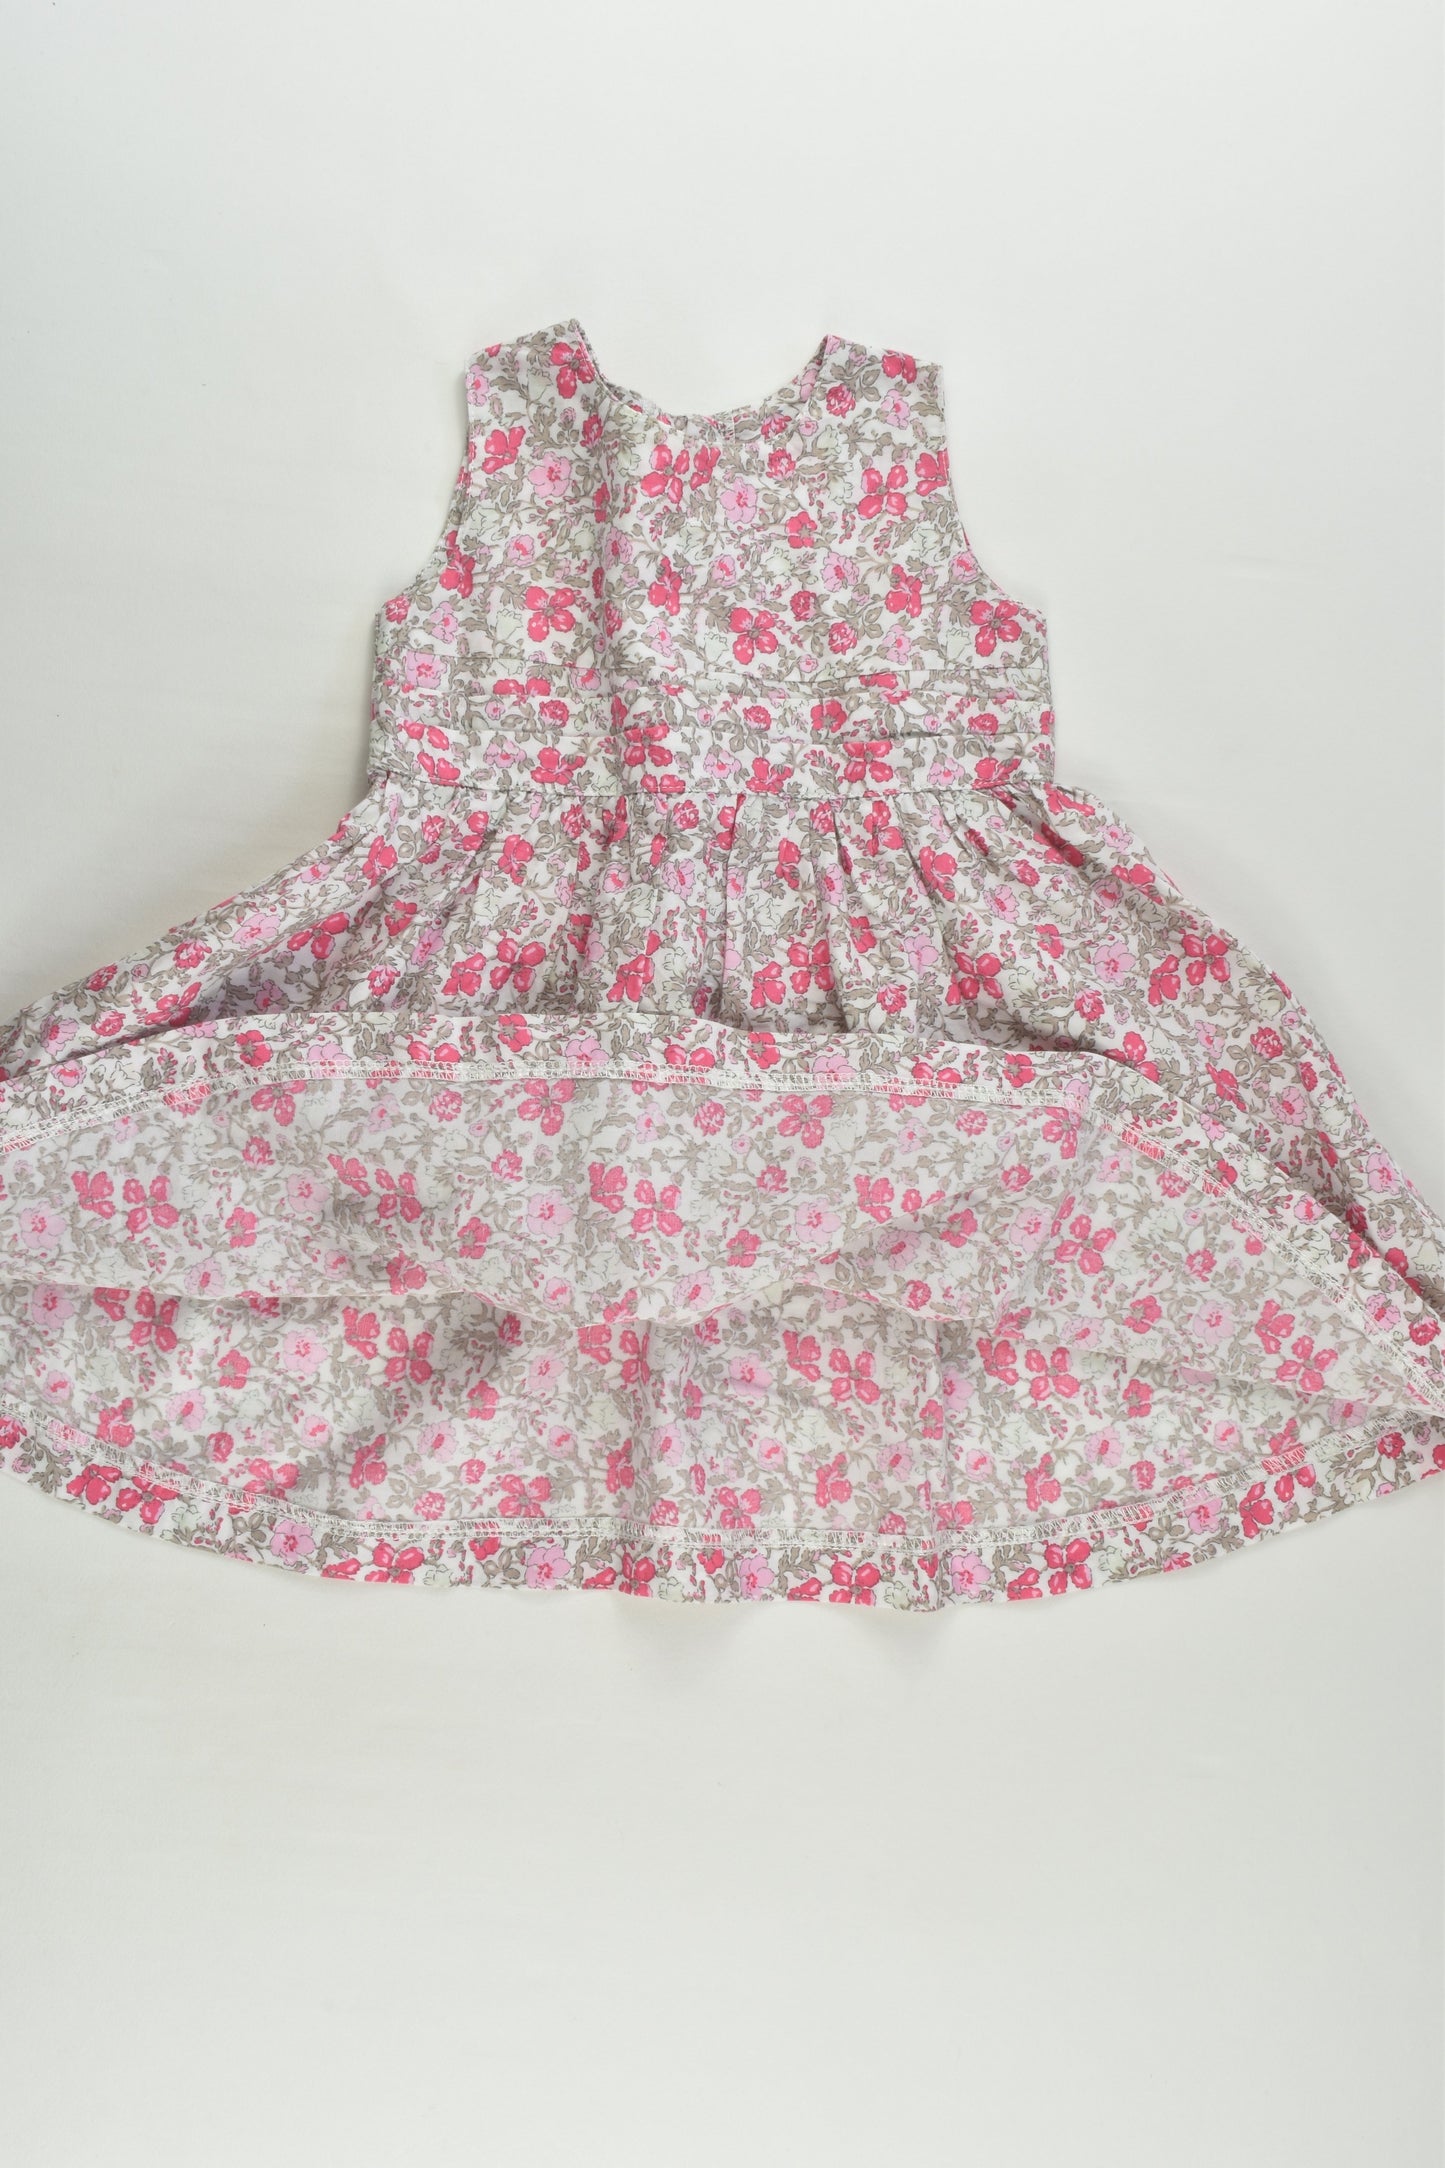 Jellybeans Size 0 (12 months) Floral Dress